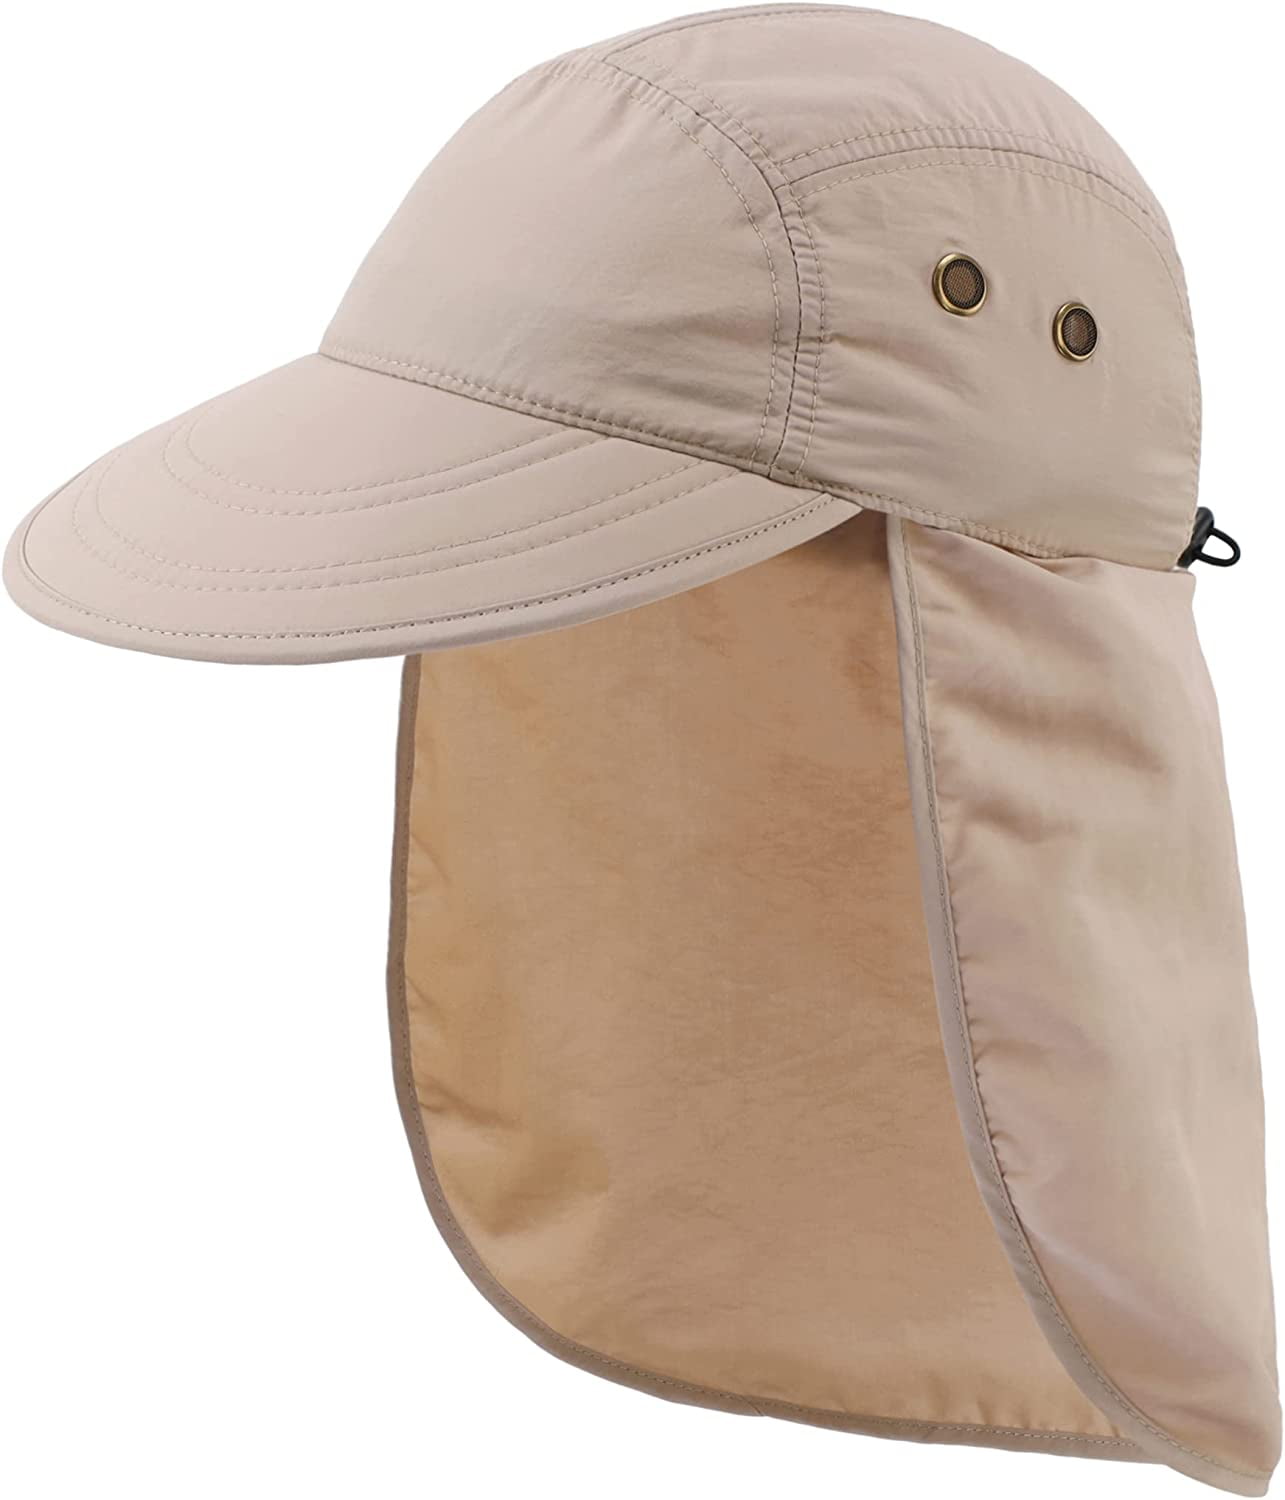 QWZNDZGR Mens UV Sun Protection Cap Safari Hike Cap with Neck Flap